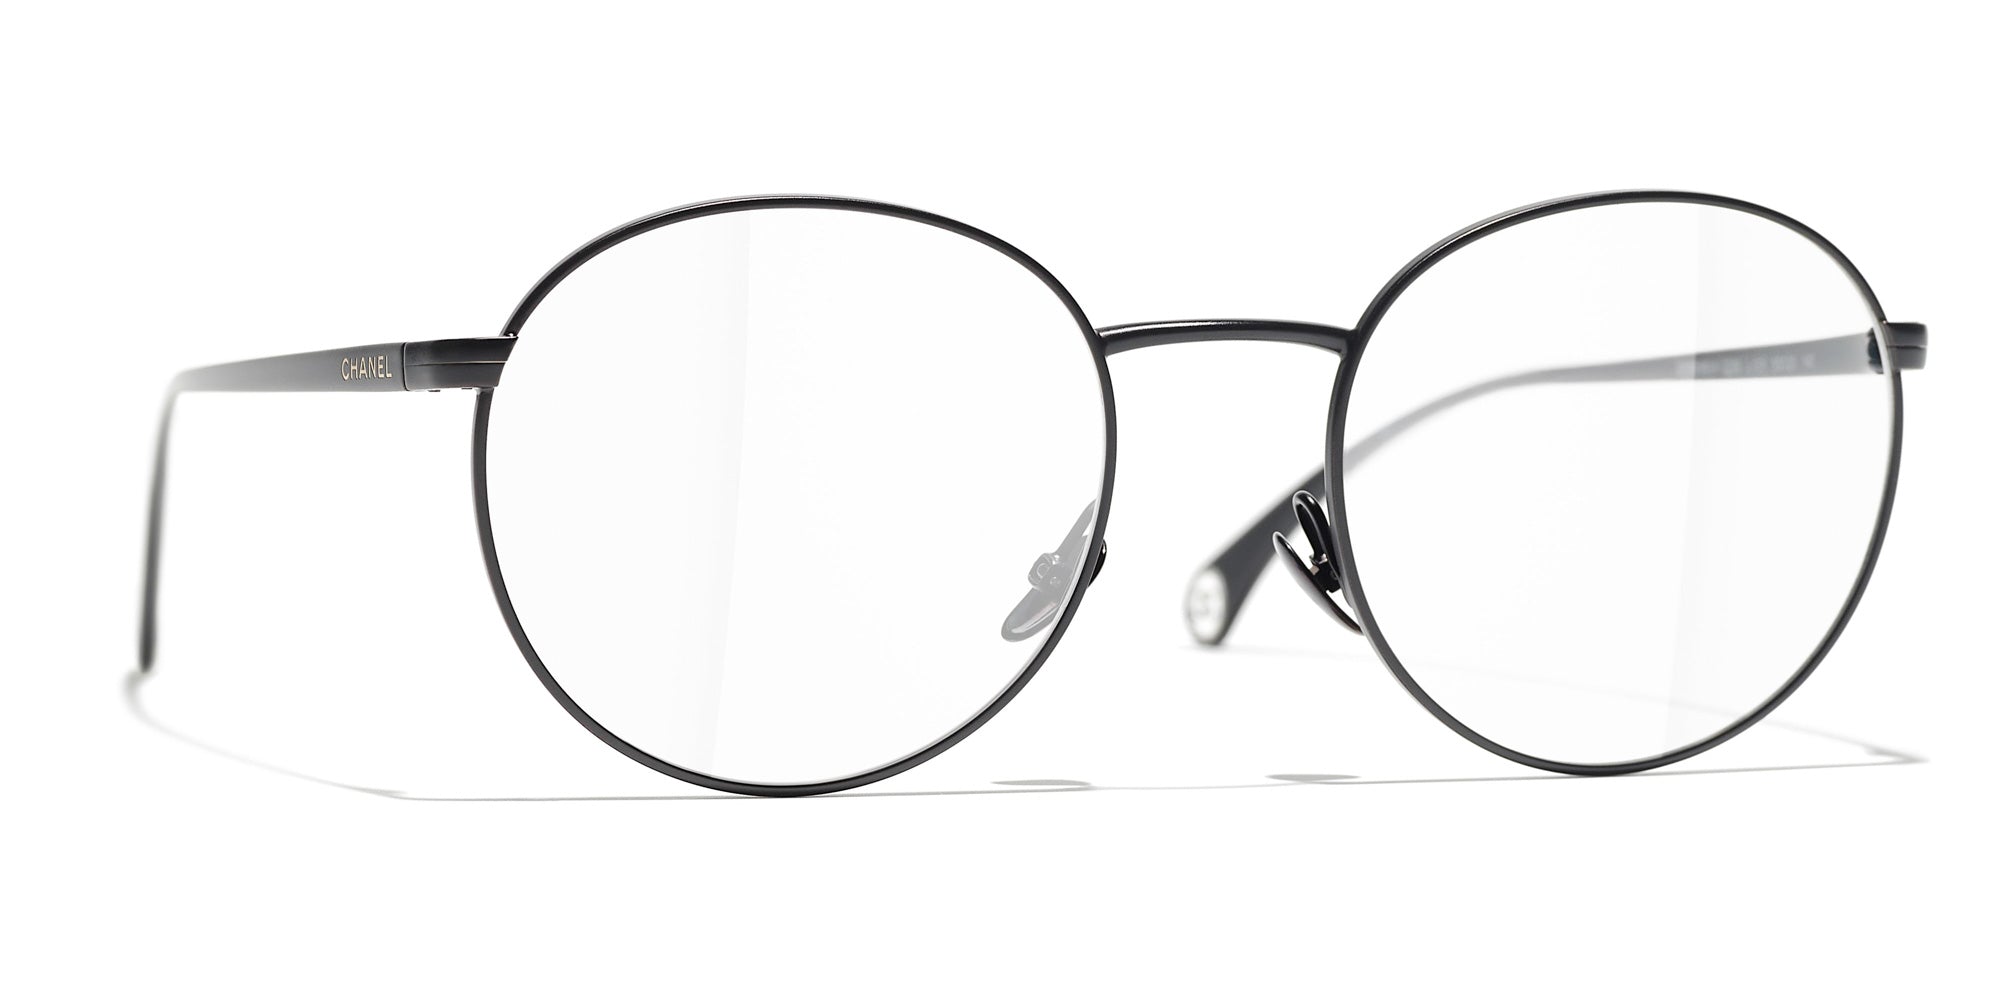 Chanel 2209 Glasses Silver Oval Women